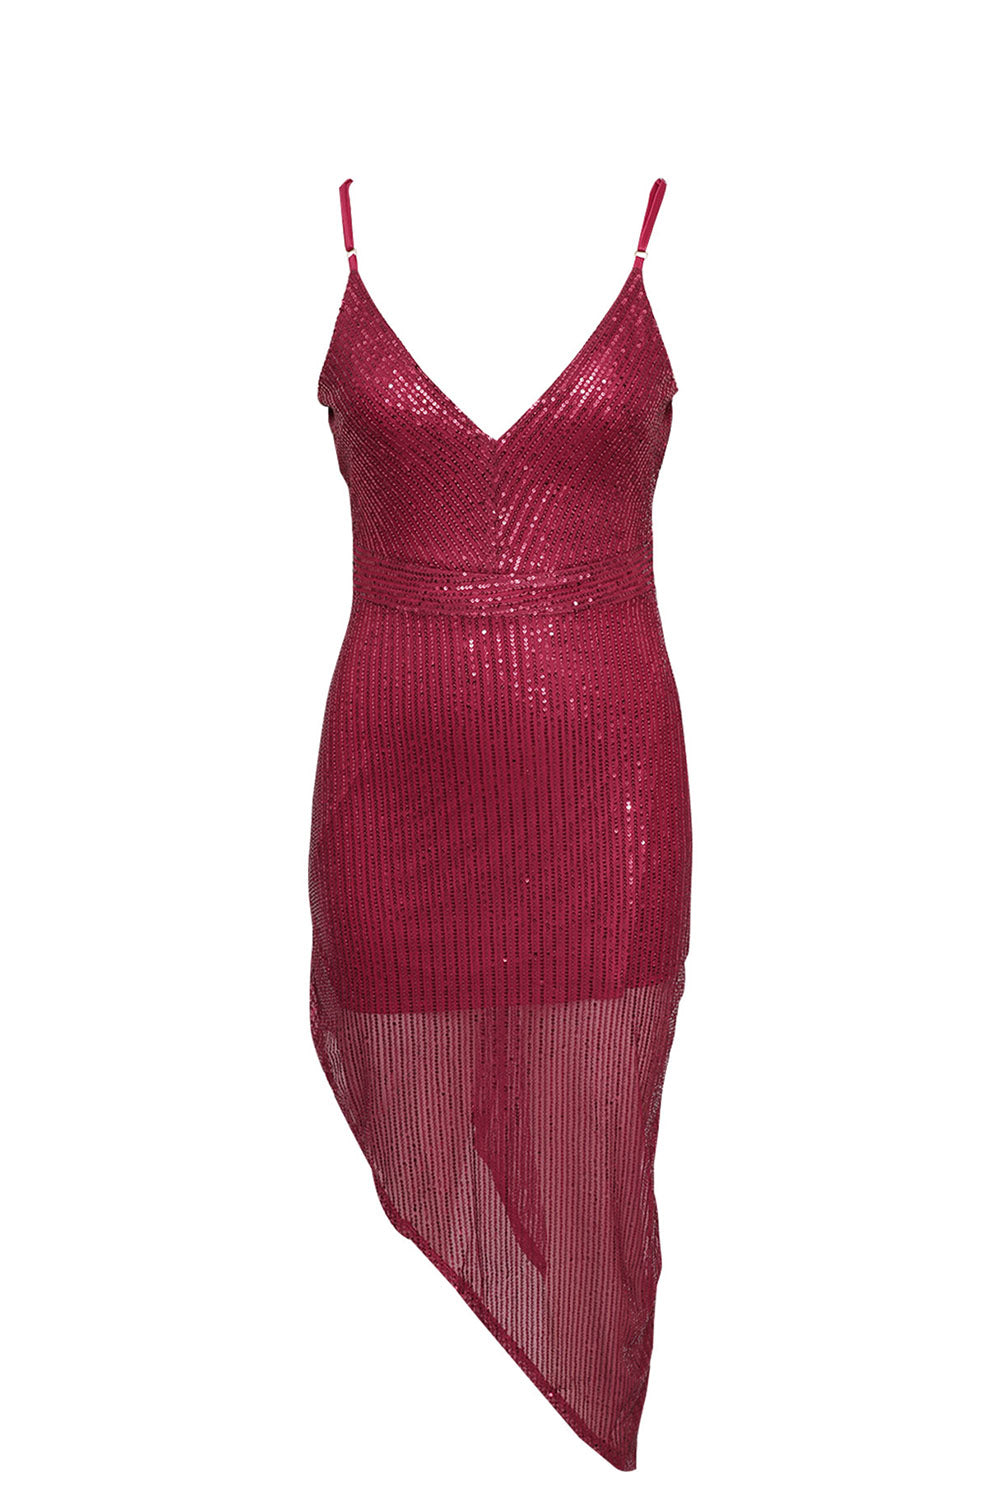 Red V Neck Bodycon Sequin Dress - EBEPEX